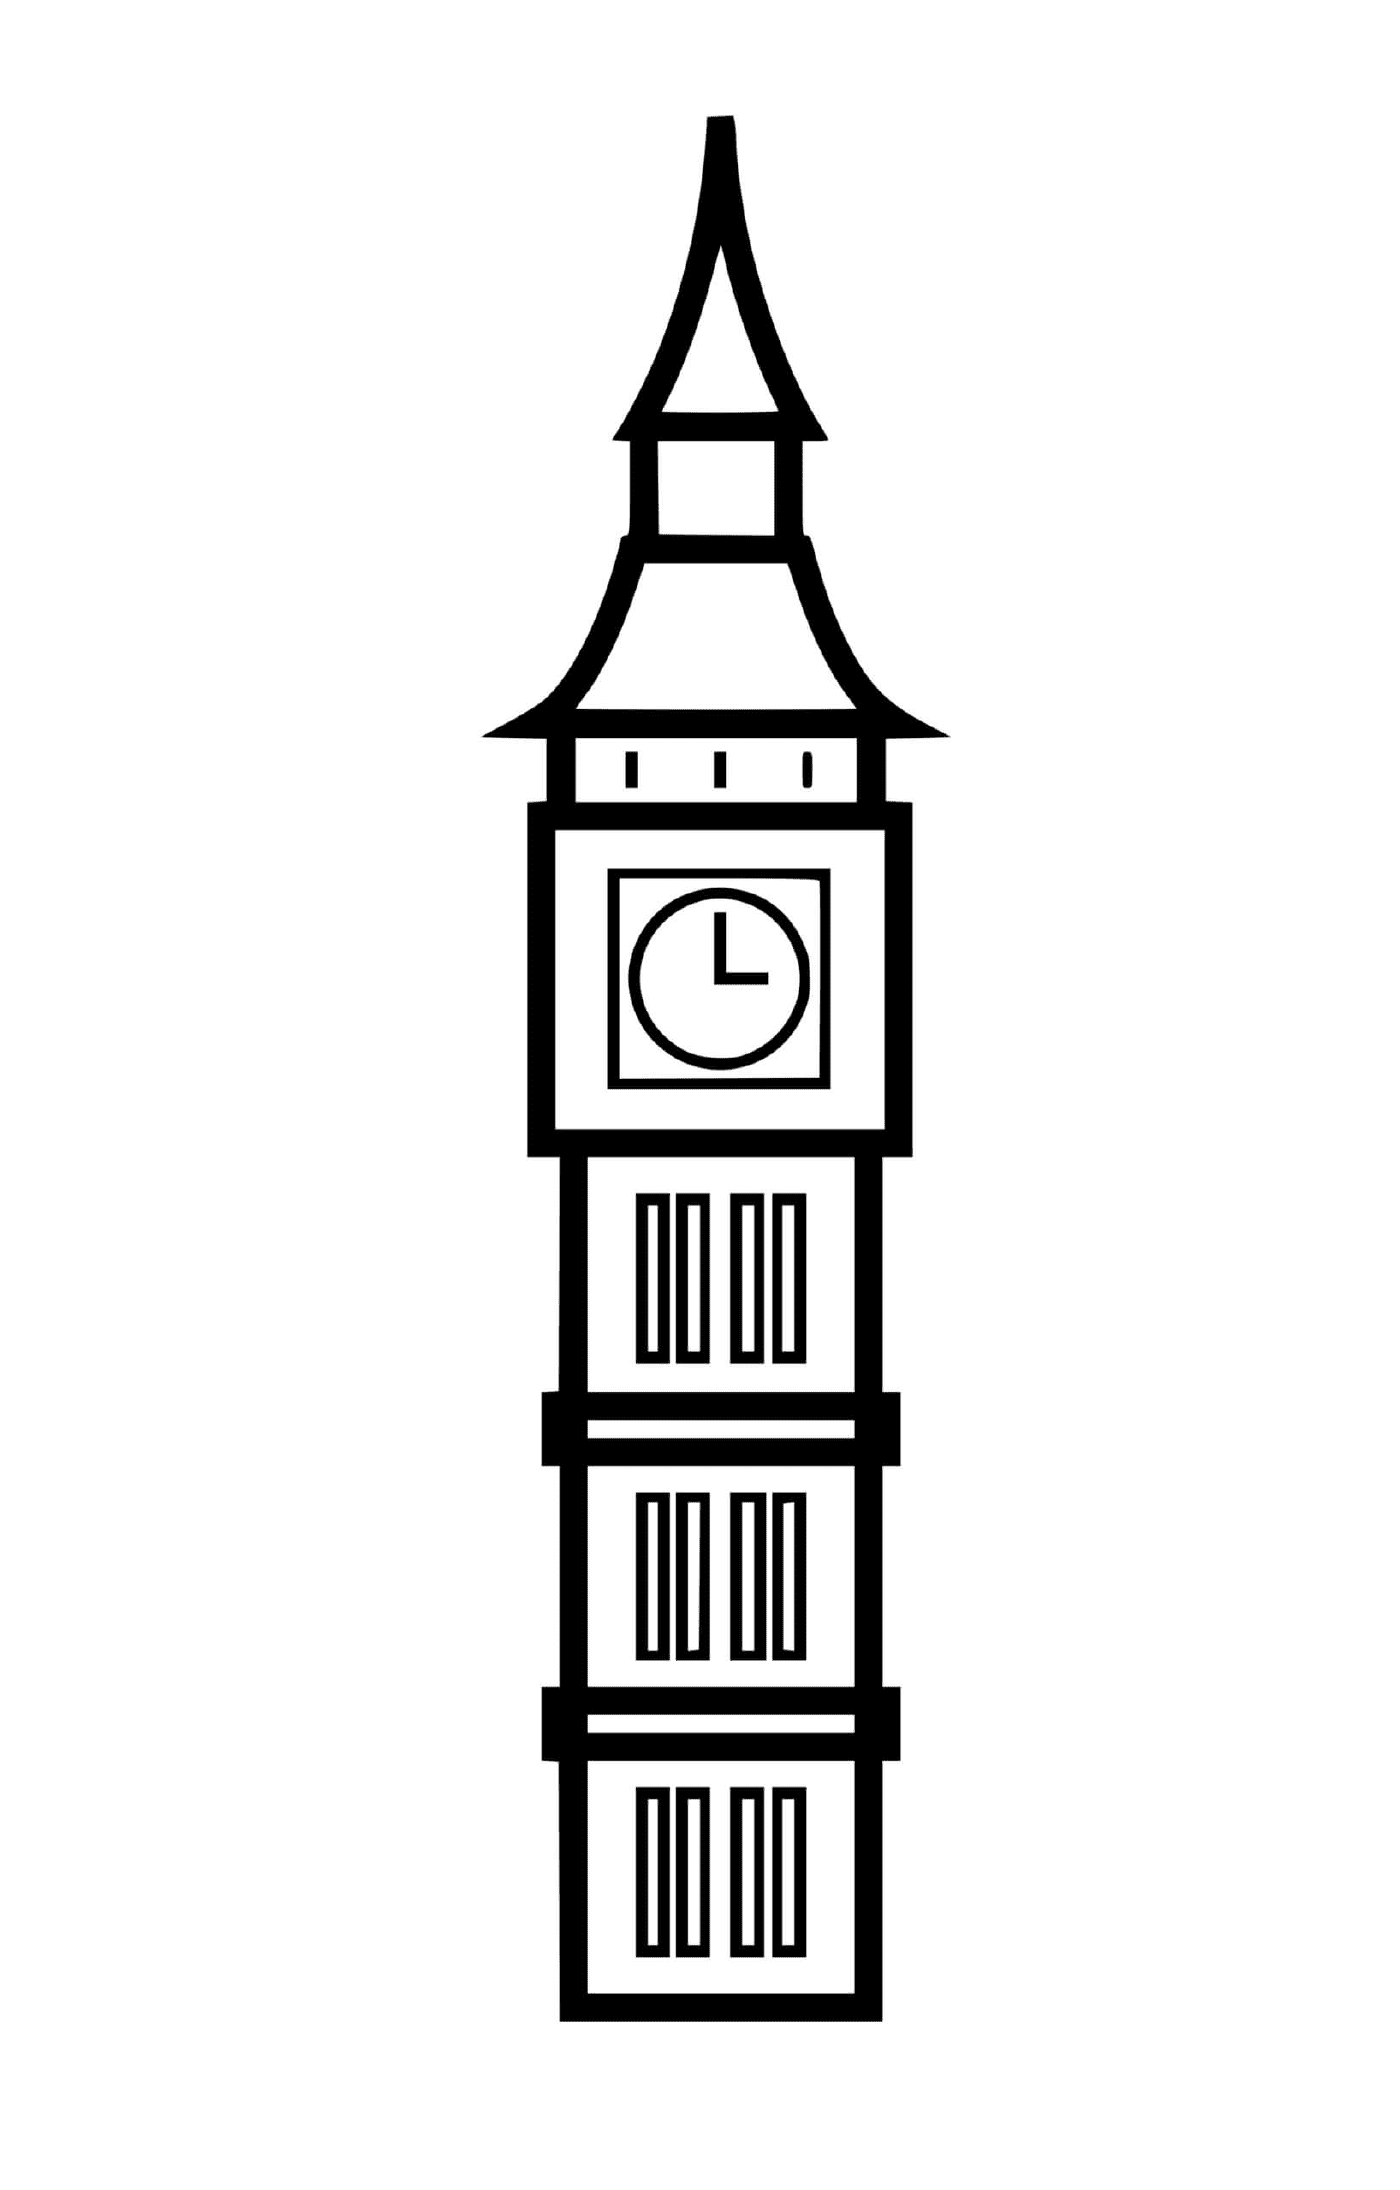  Big Ben la torre dell'orologio del palazzo 